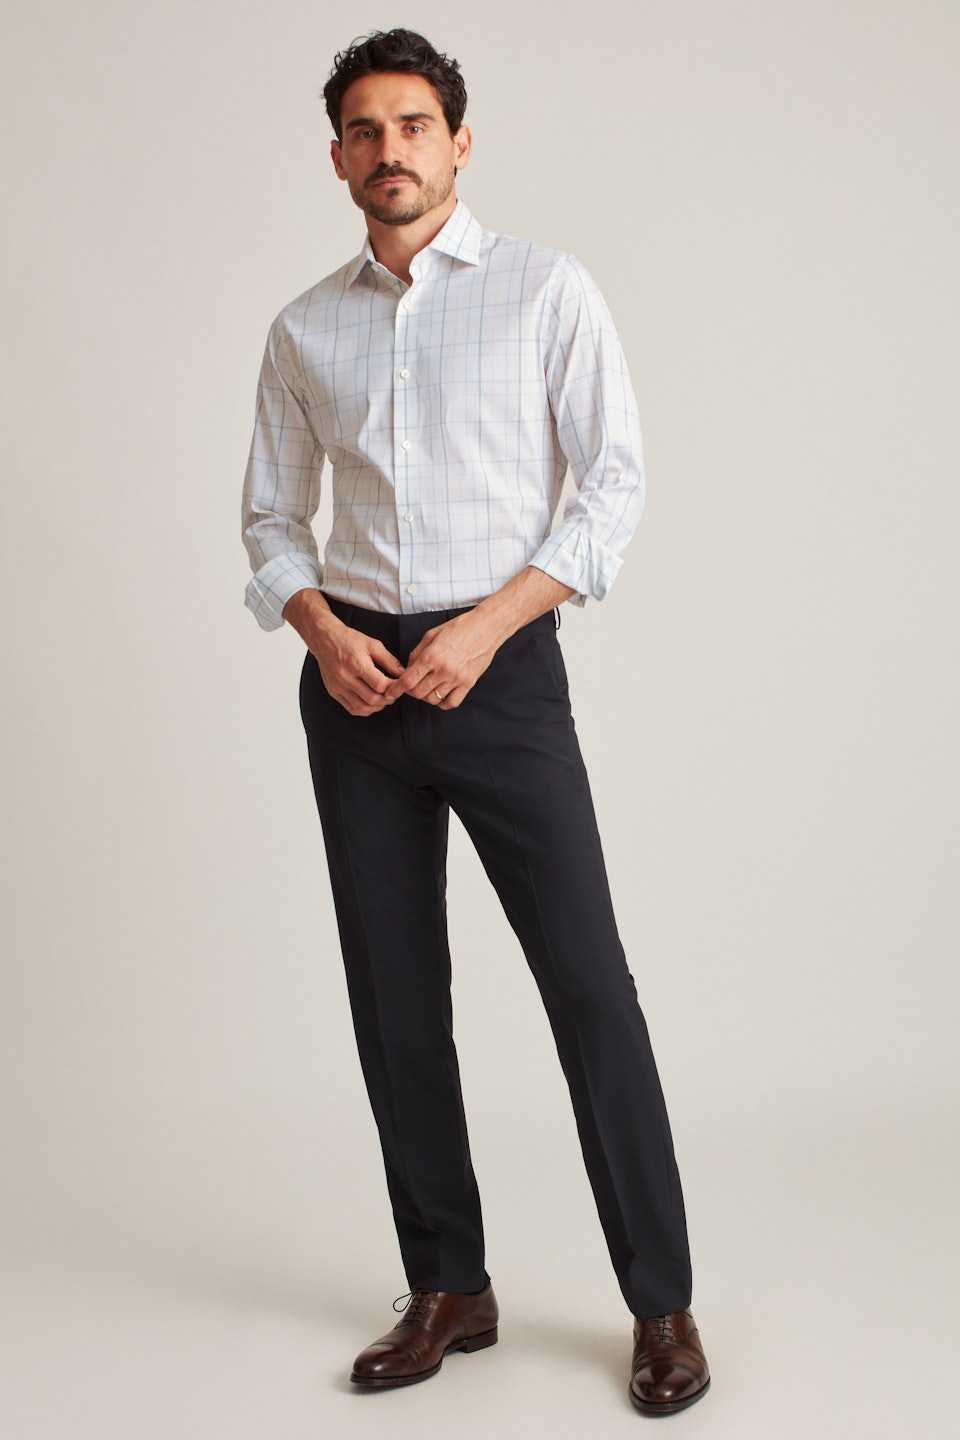 Men's Upscale Stand Up Collar Performance Shirt - Quality Restaurant  Uniforms